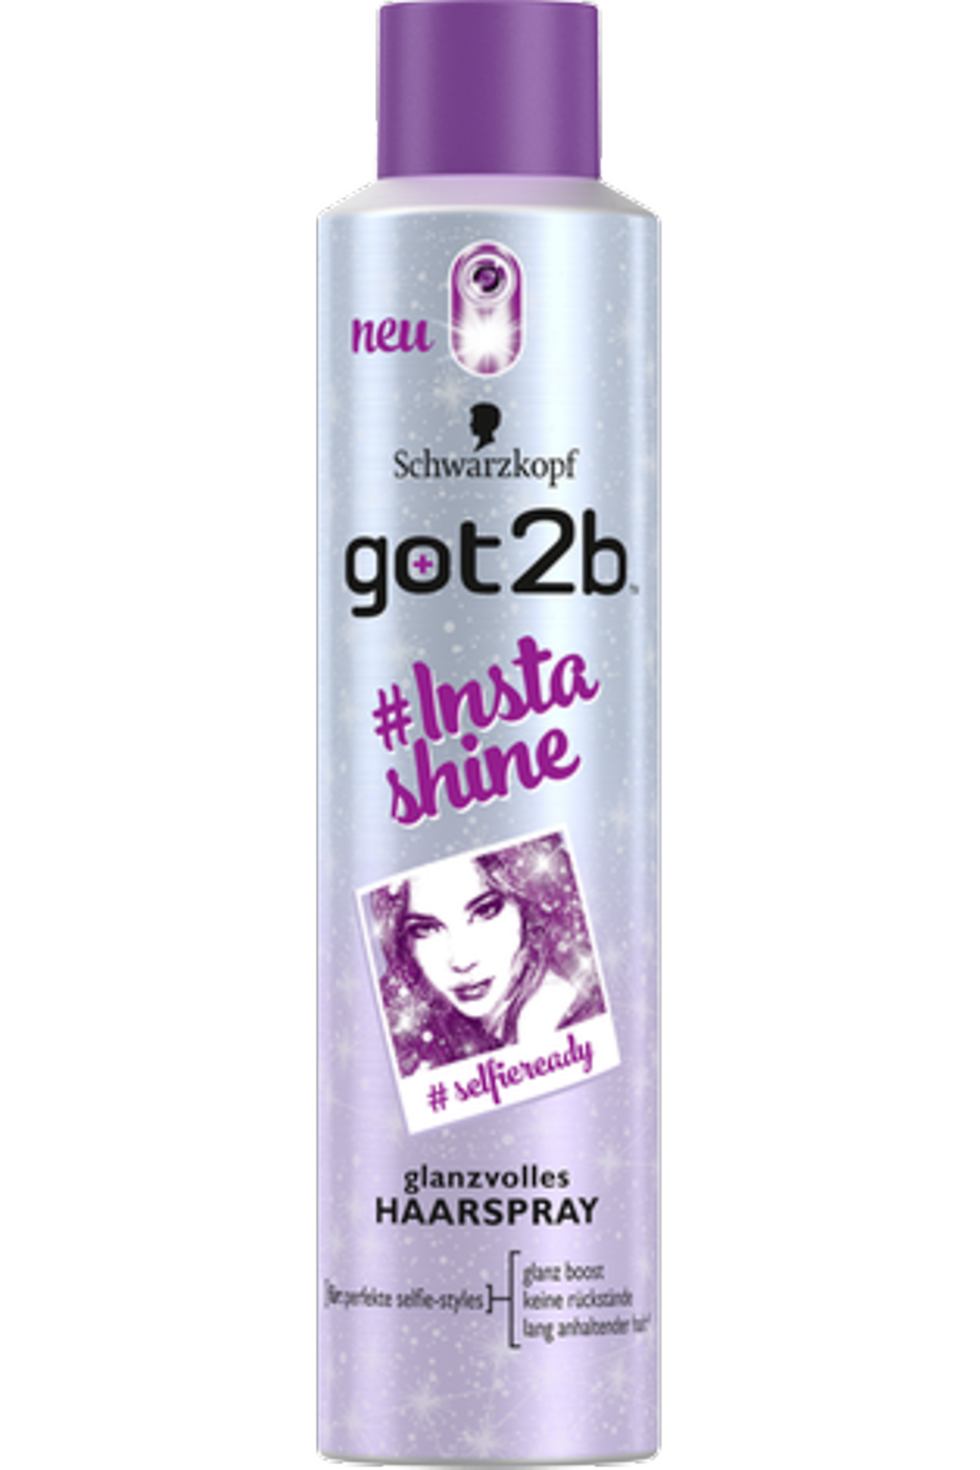 got2b #Instashine glanzvolles Haarspray